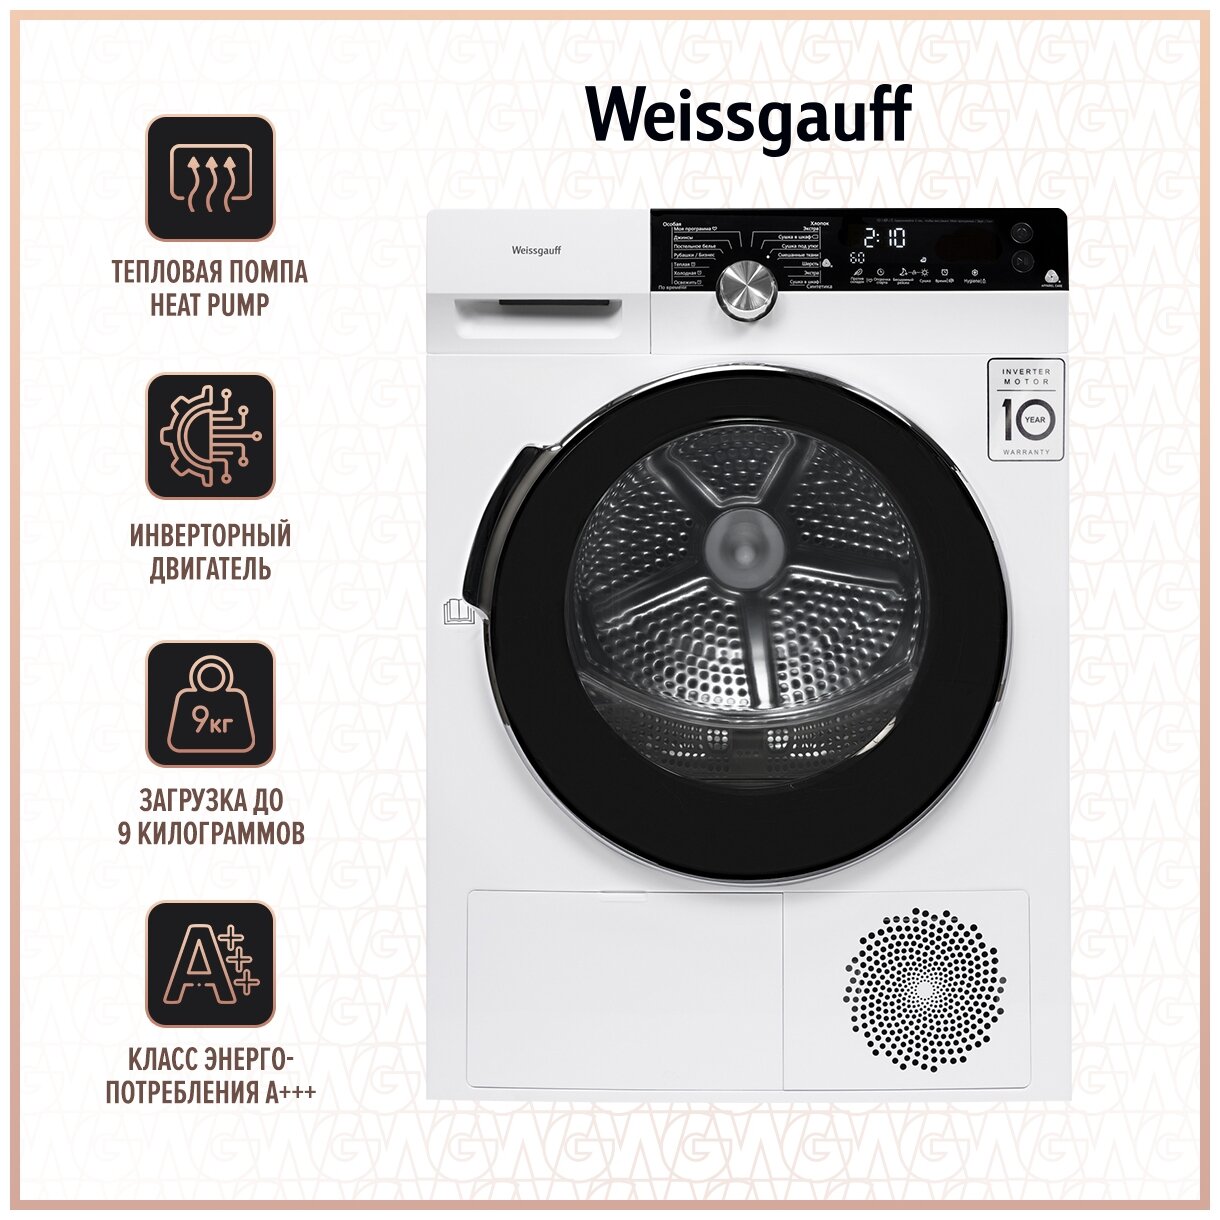 Сушильная машина Weissgauff WD 599 DC Inverter Heat Pump — цены на Яндекс Маркете